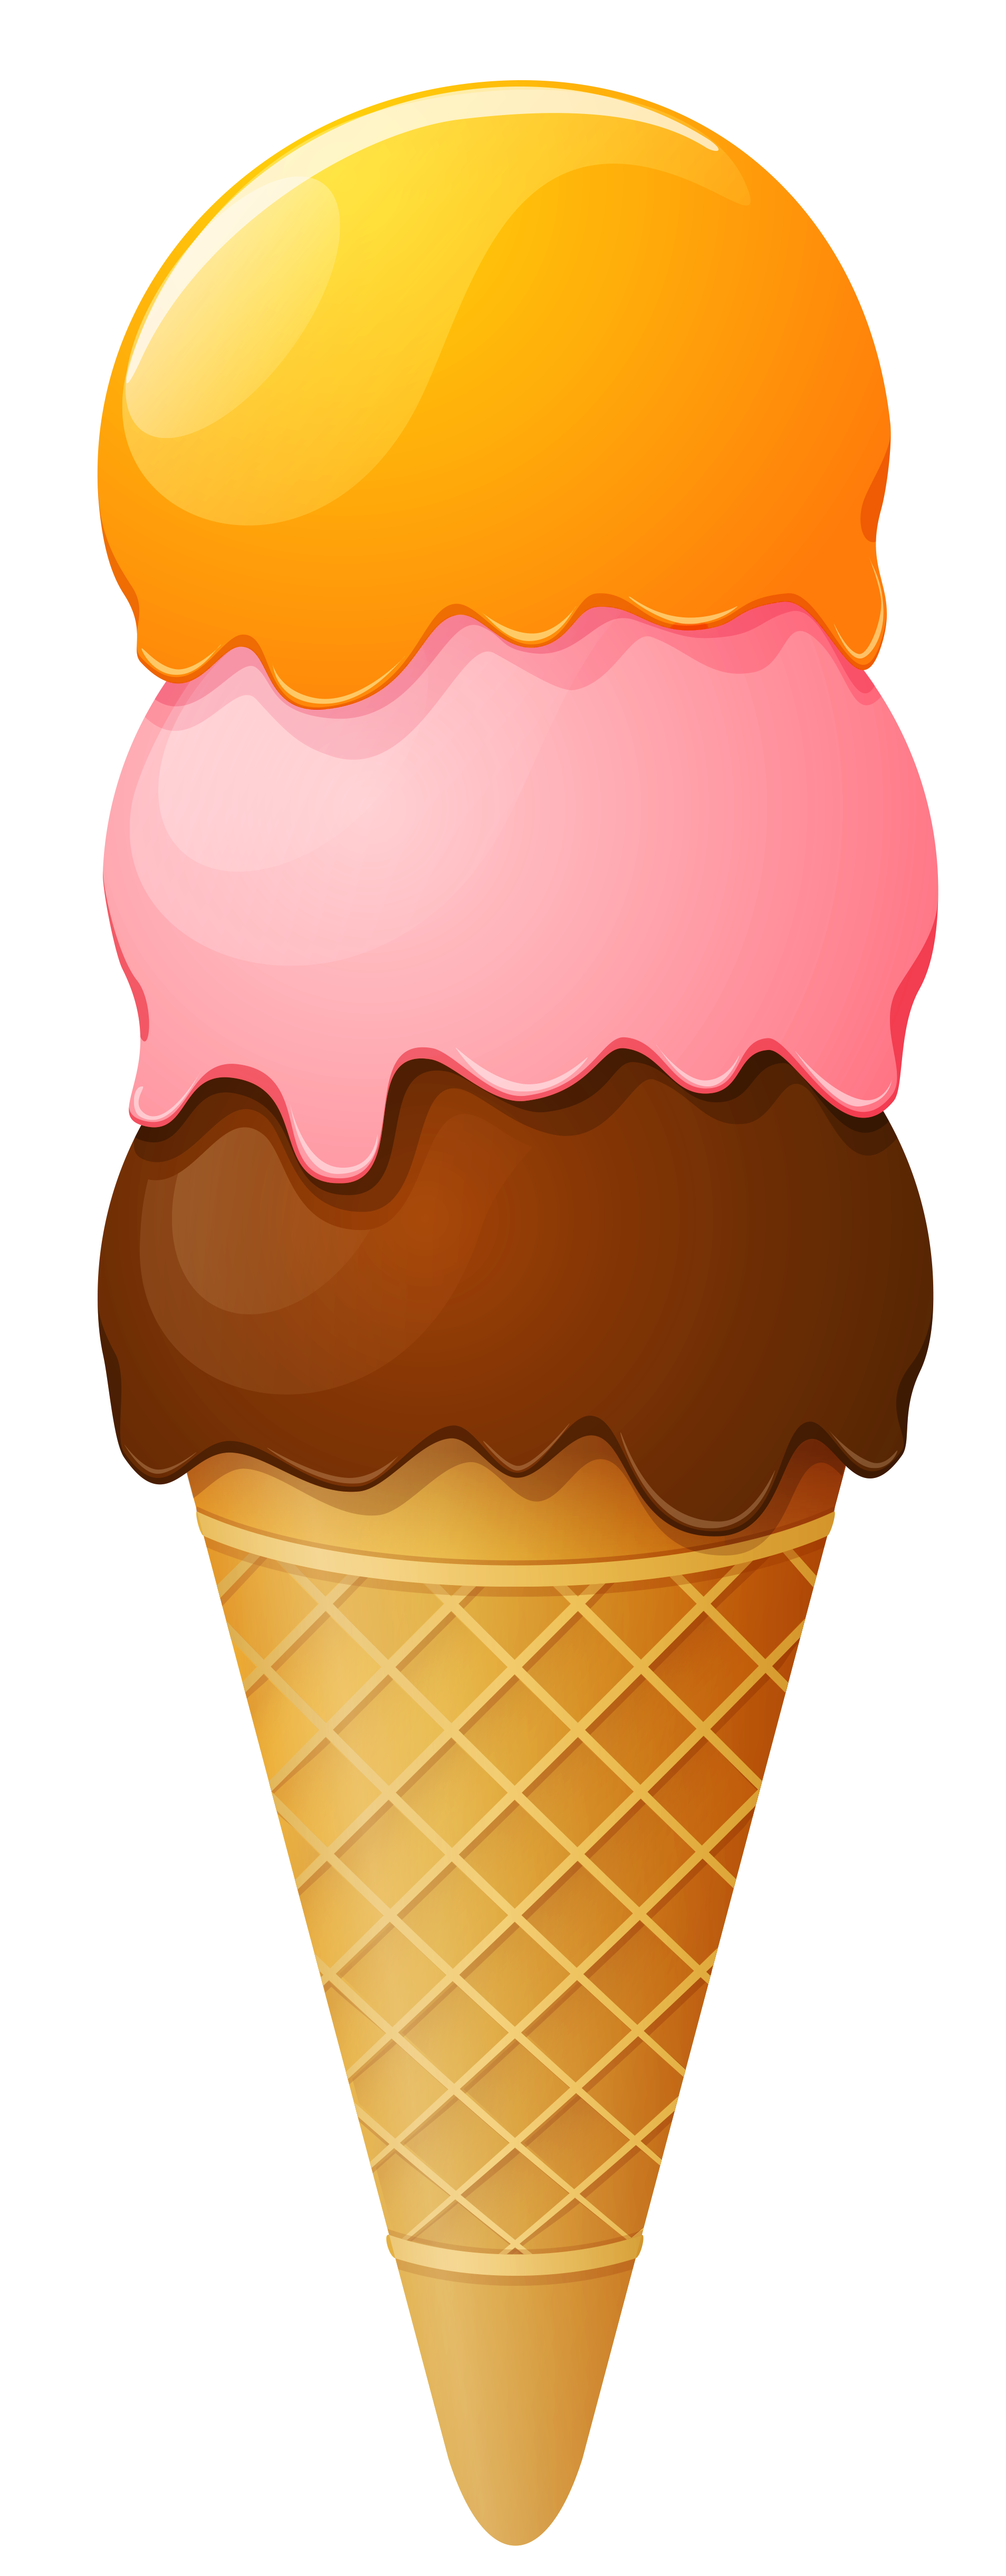 Printable Ice Cream Cone Clipart